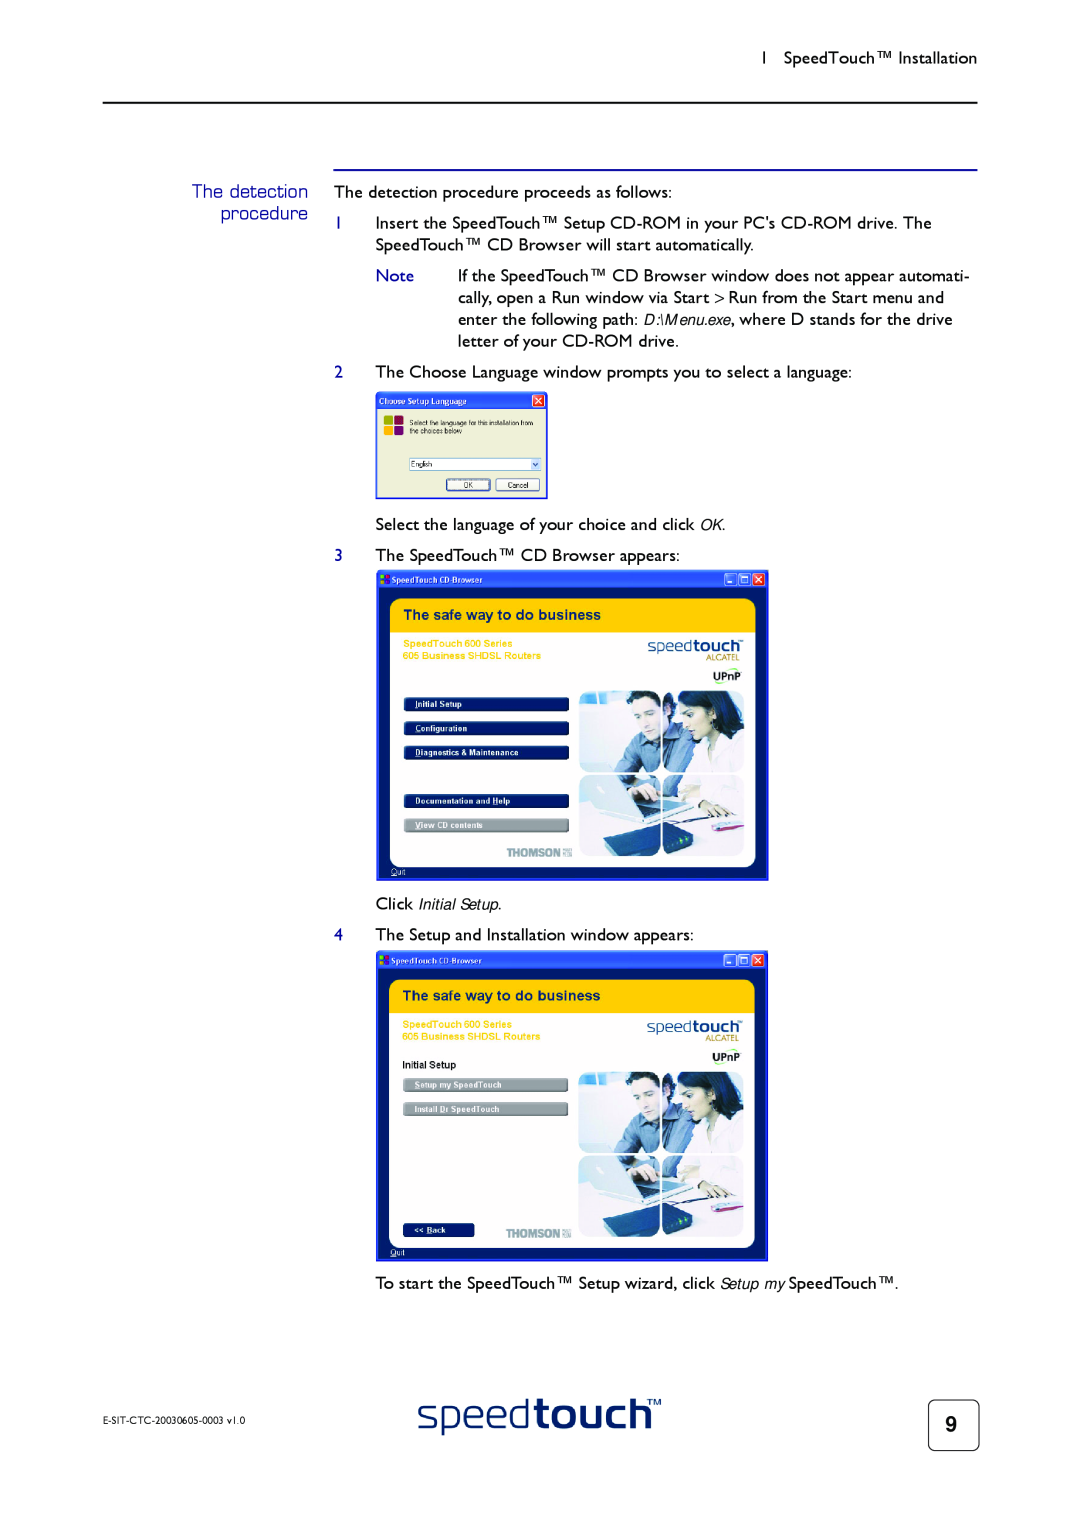 Technicolor - Thomson 605S manual Click Initial Setup, The detection procedure 